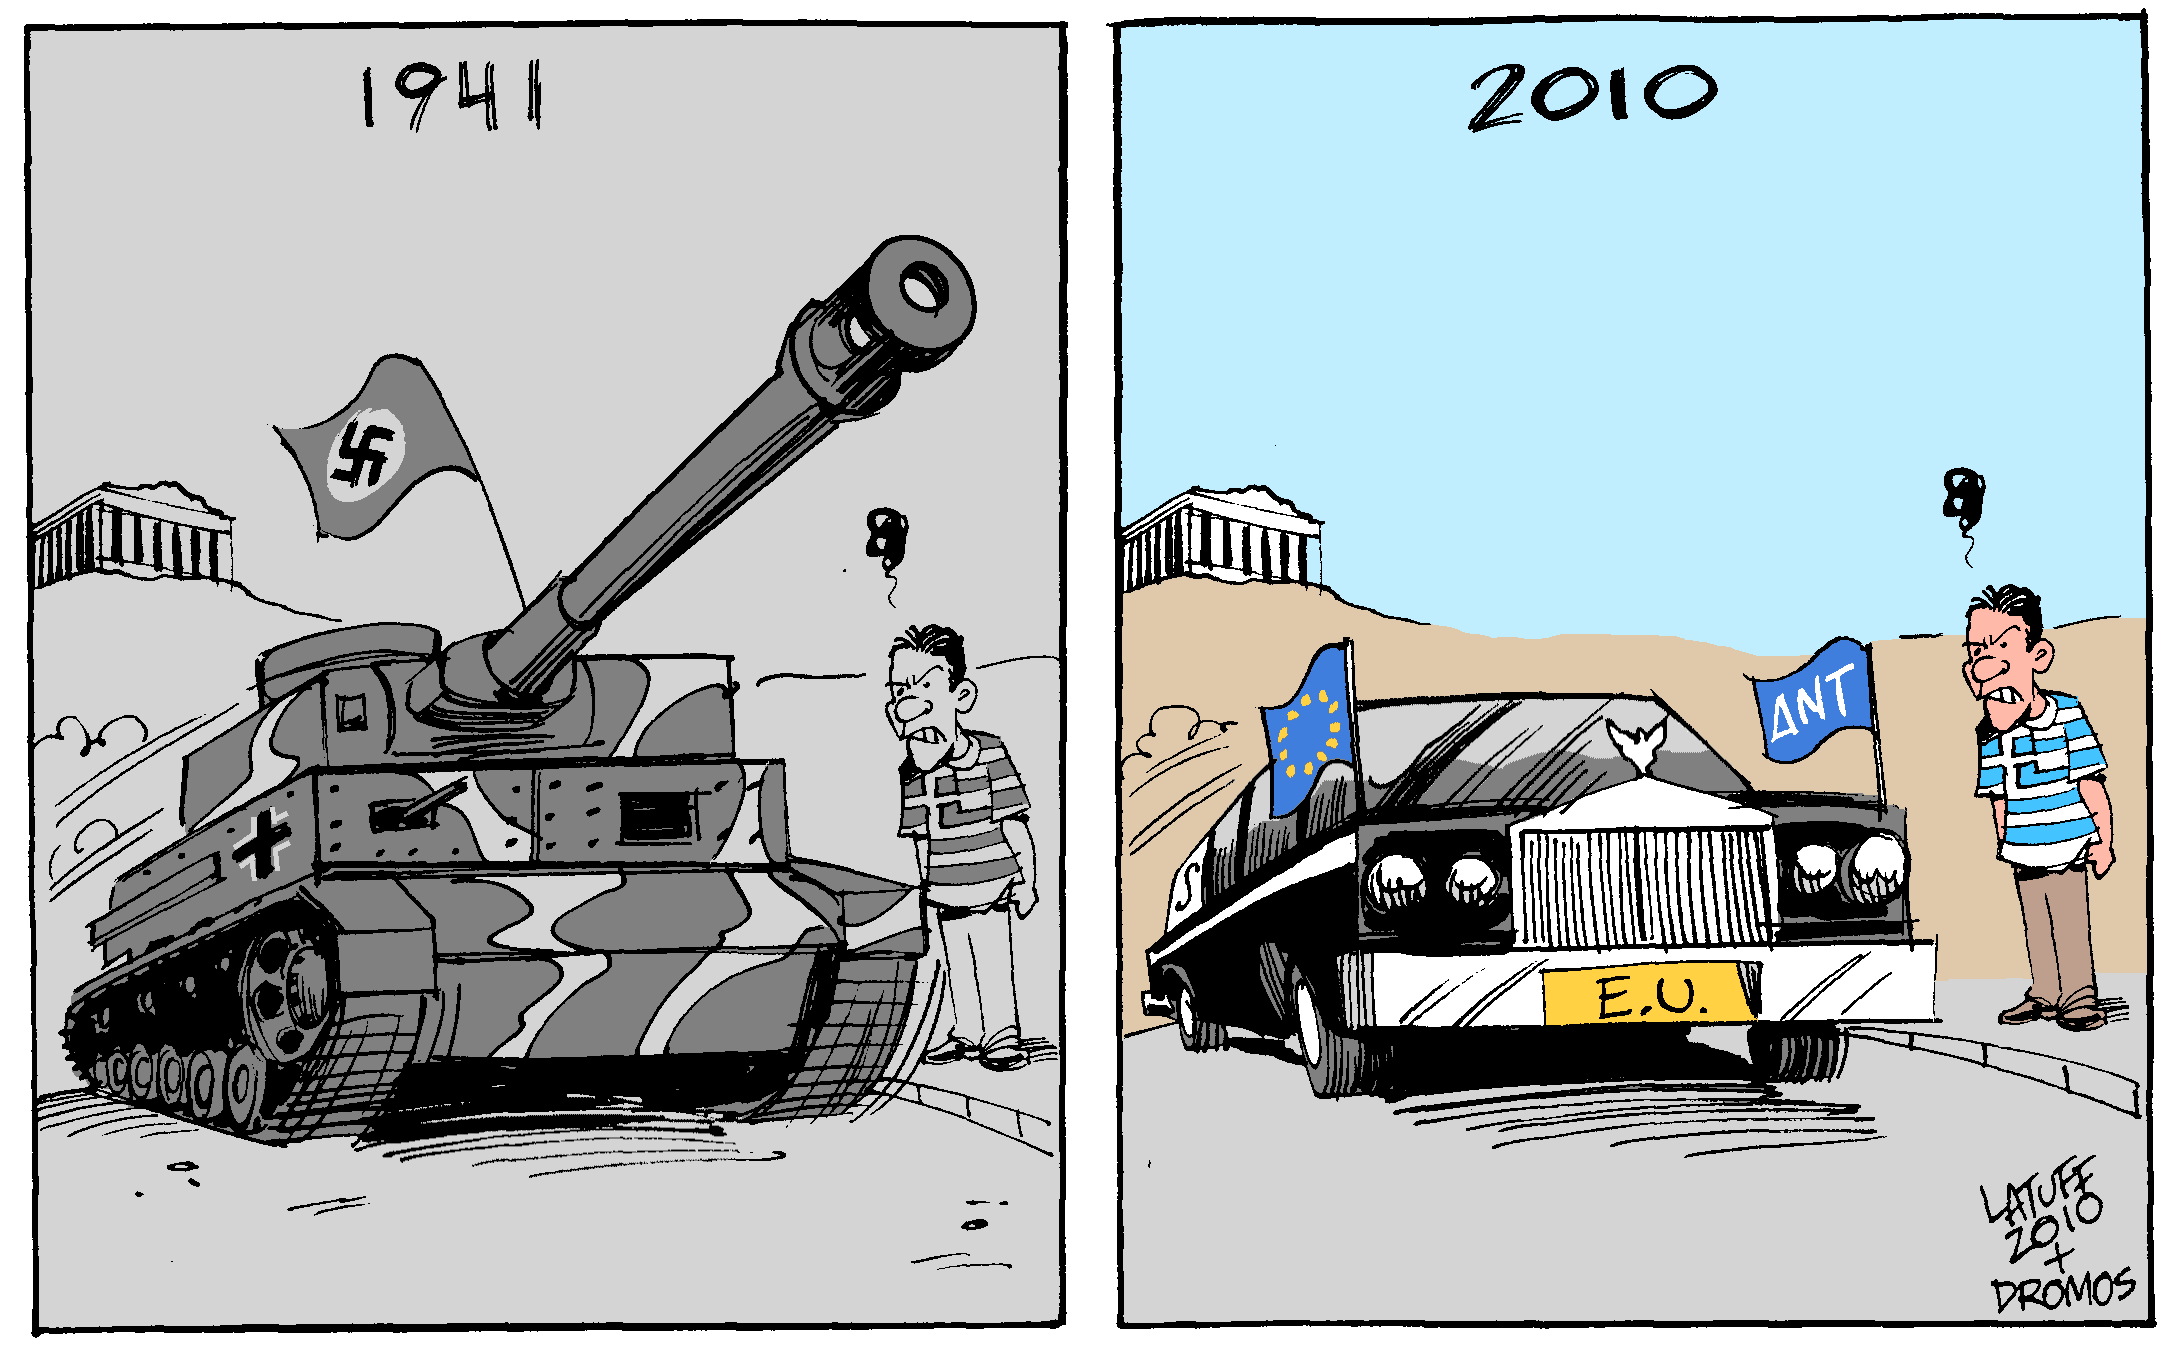 Greece under Occupation Again